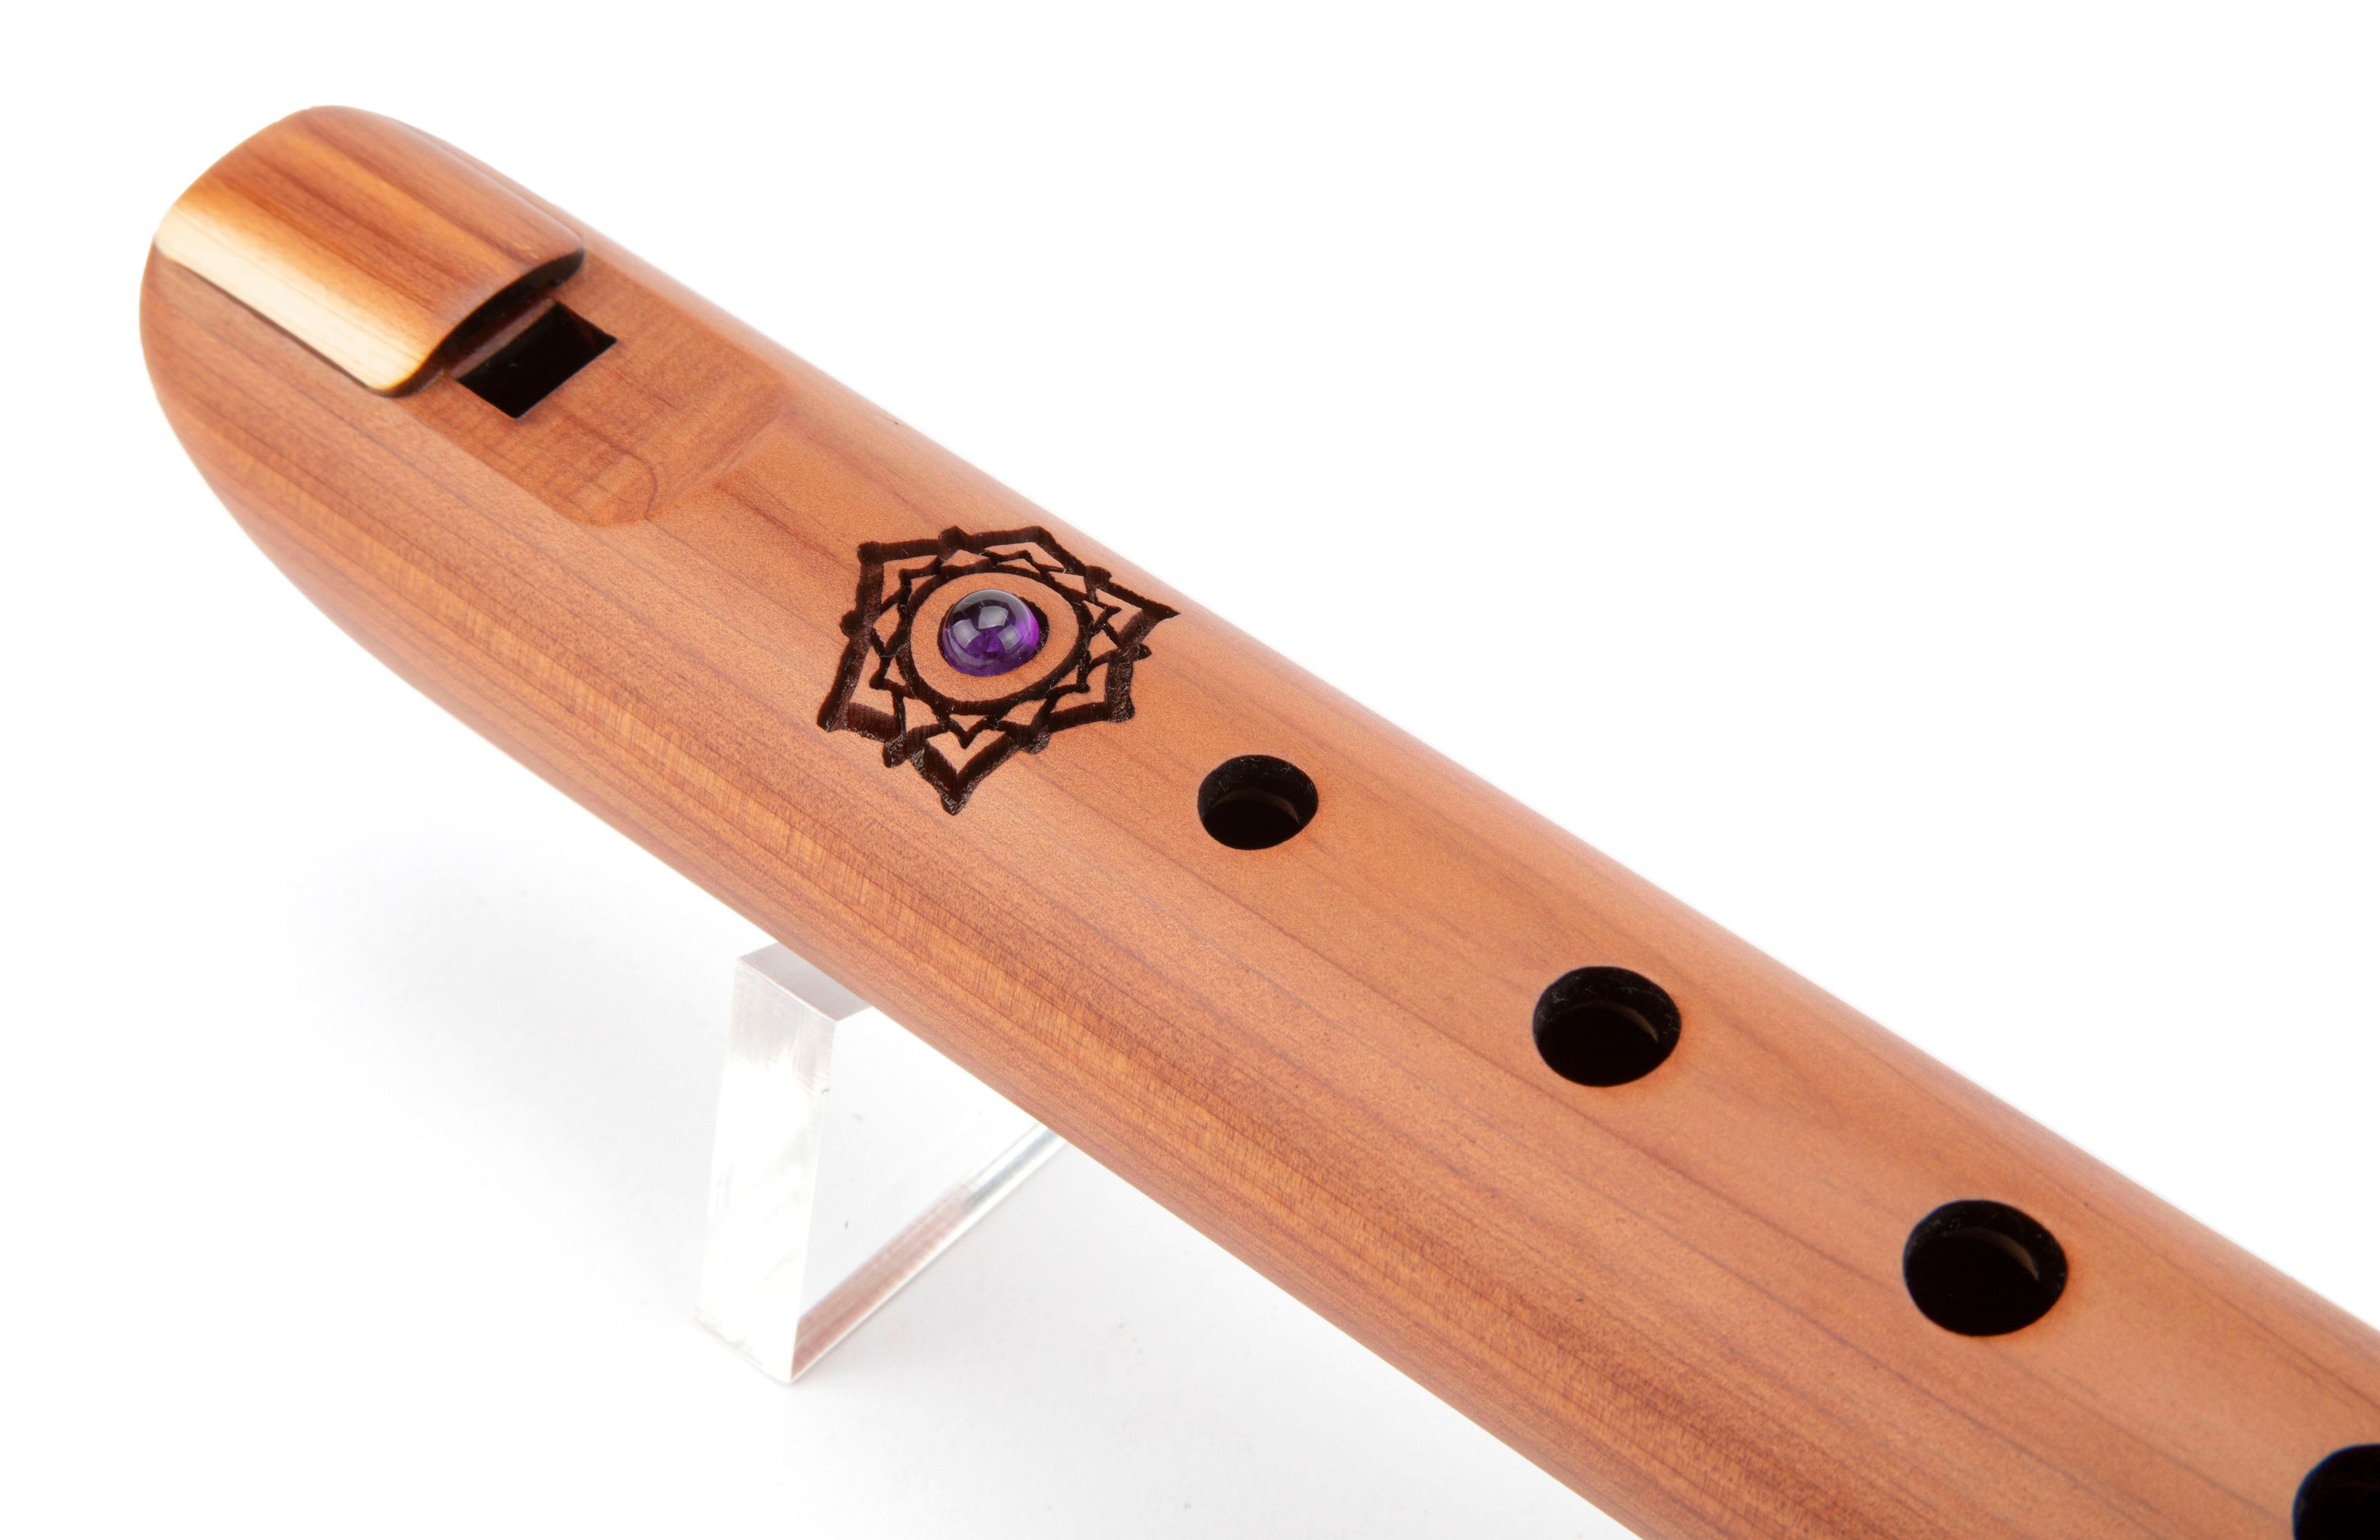 Crown Chakra Spirit Flute - key of high B